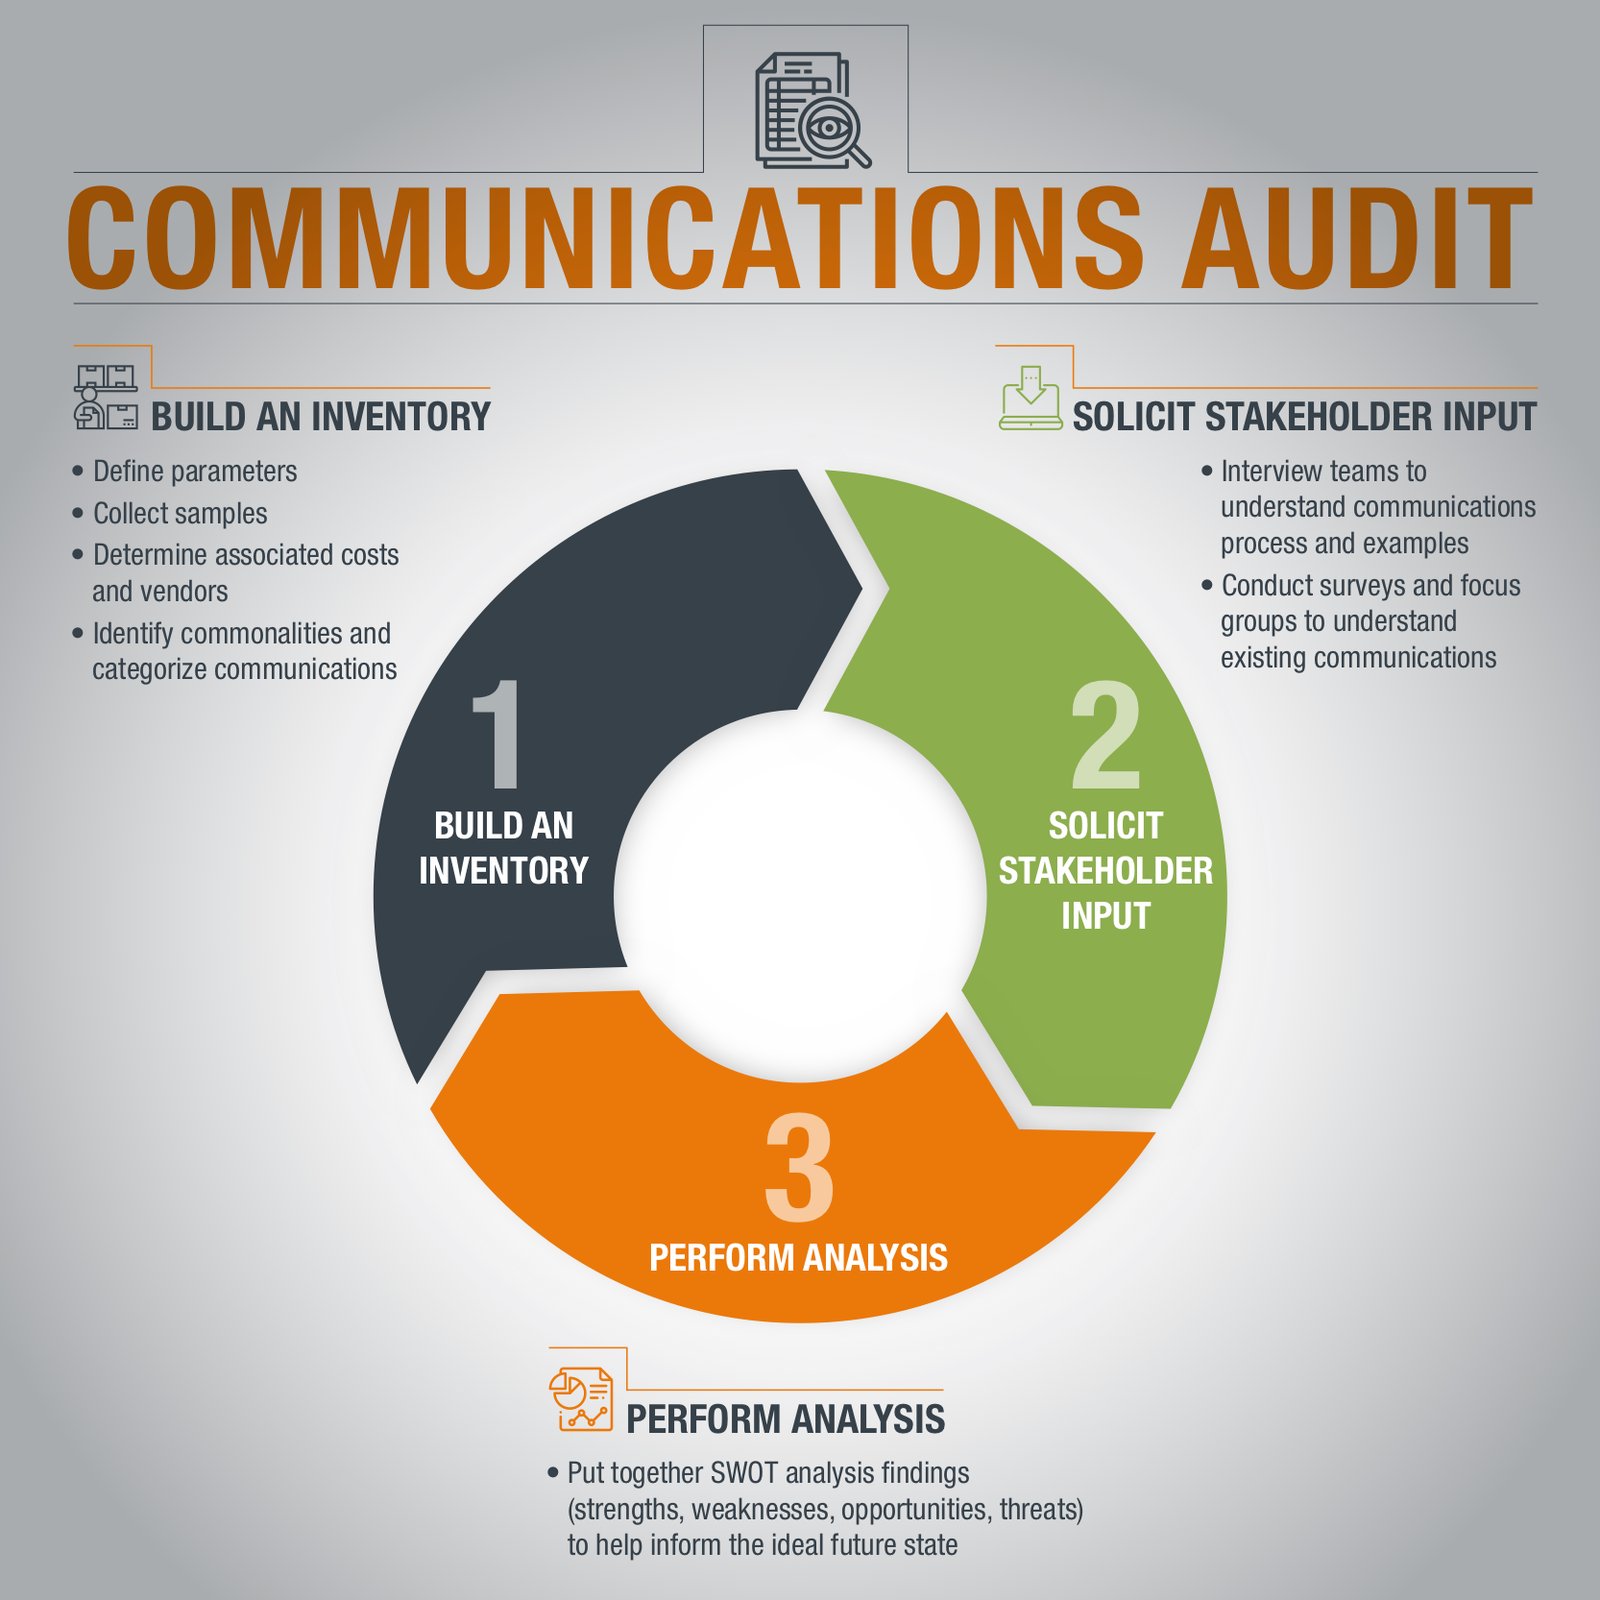 communication audit report presentation